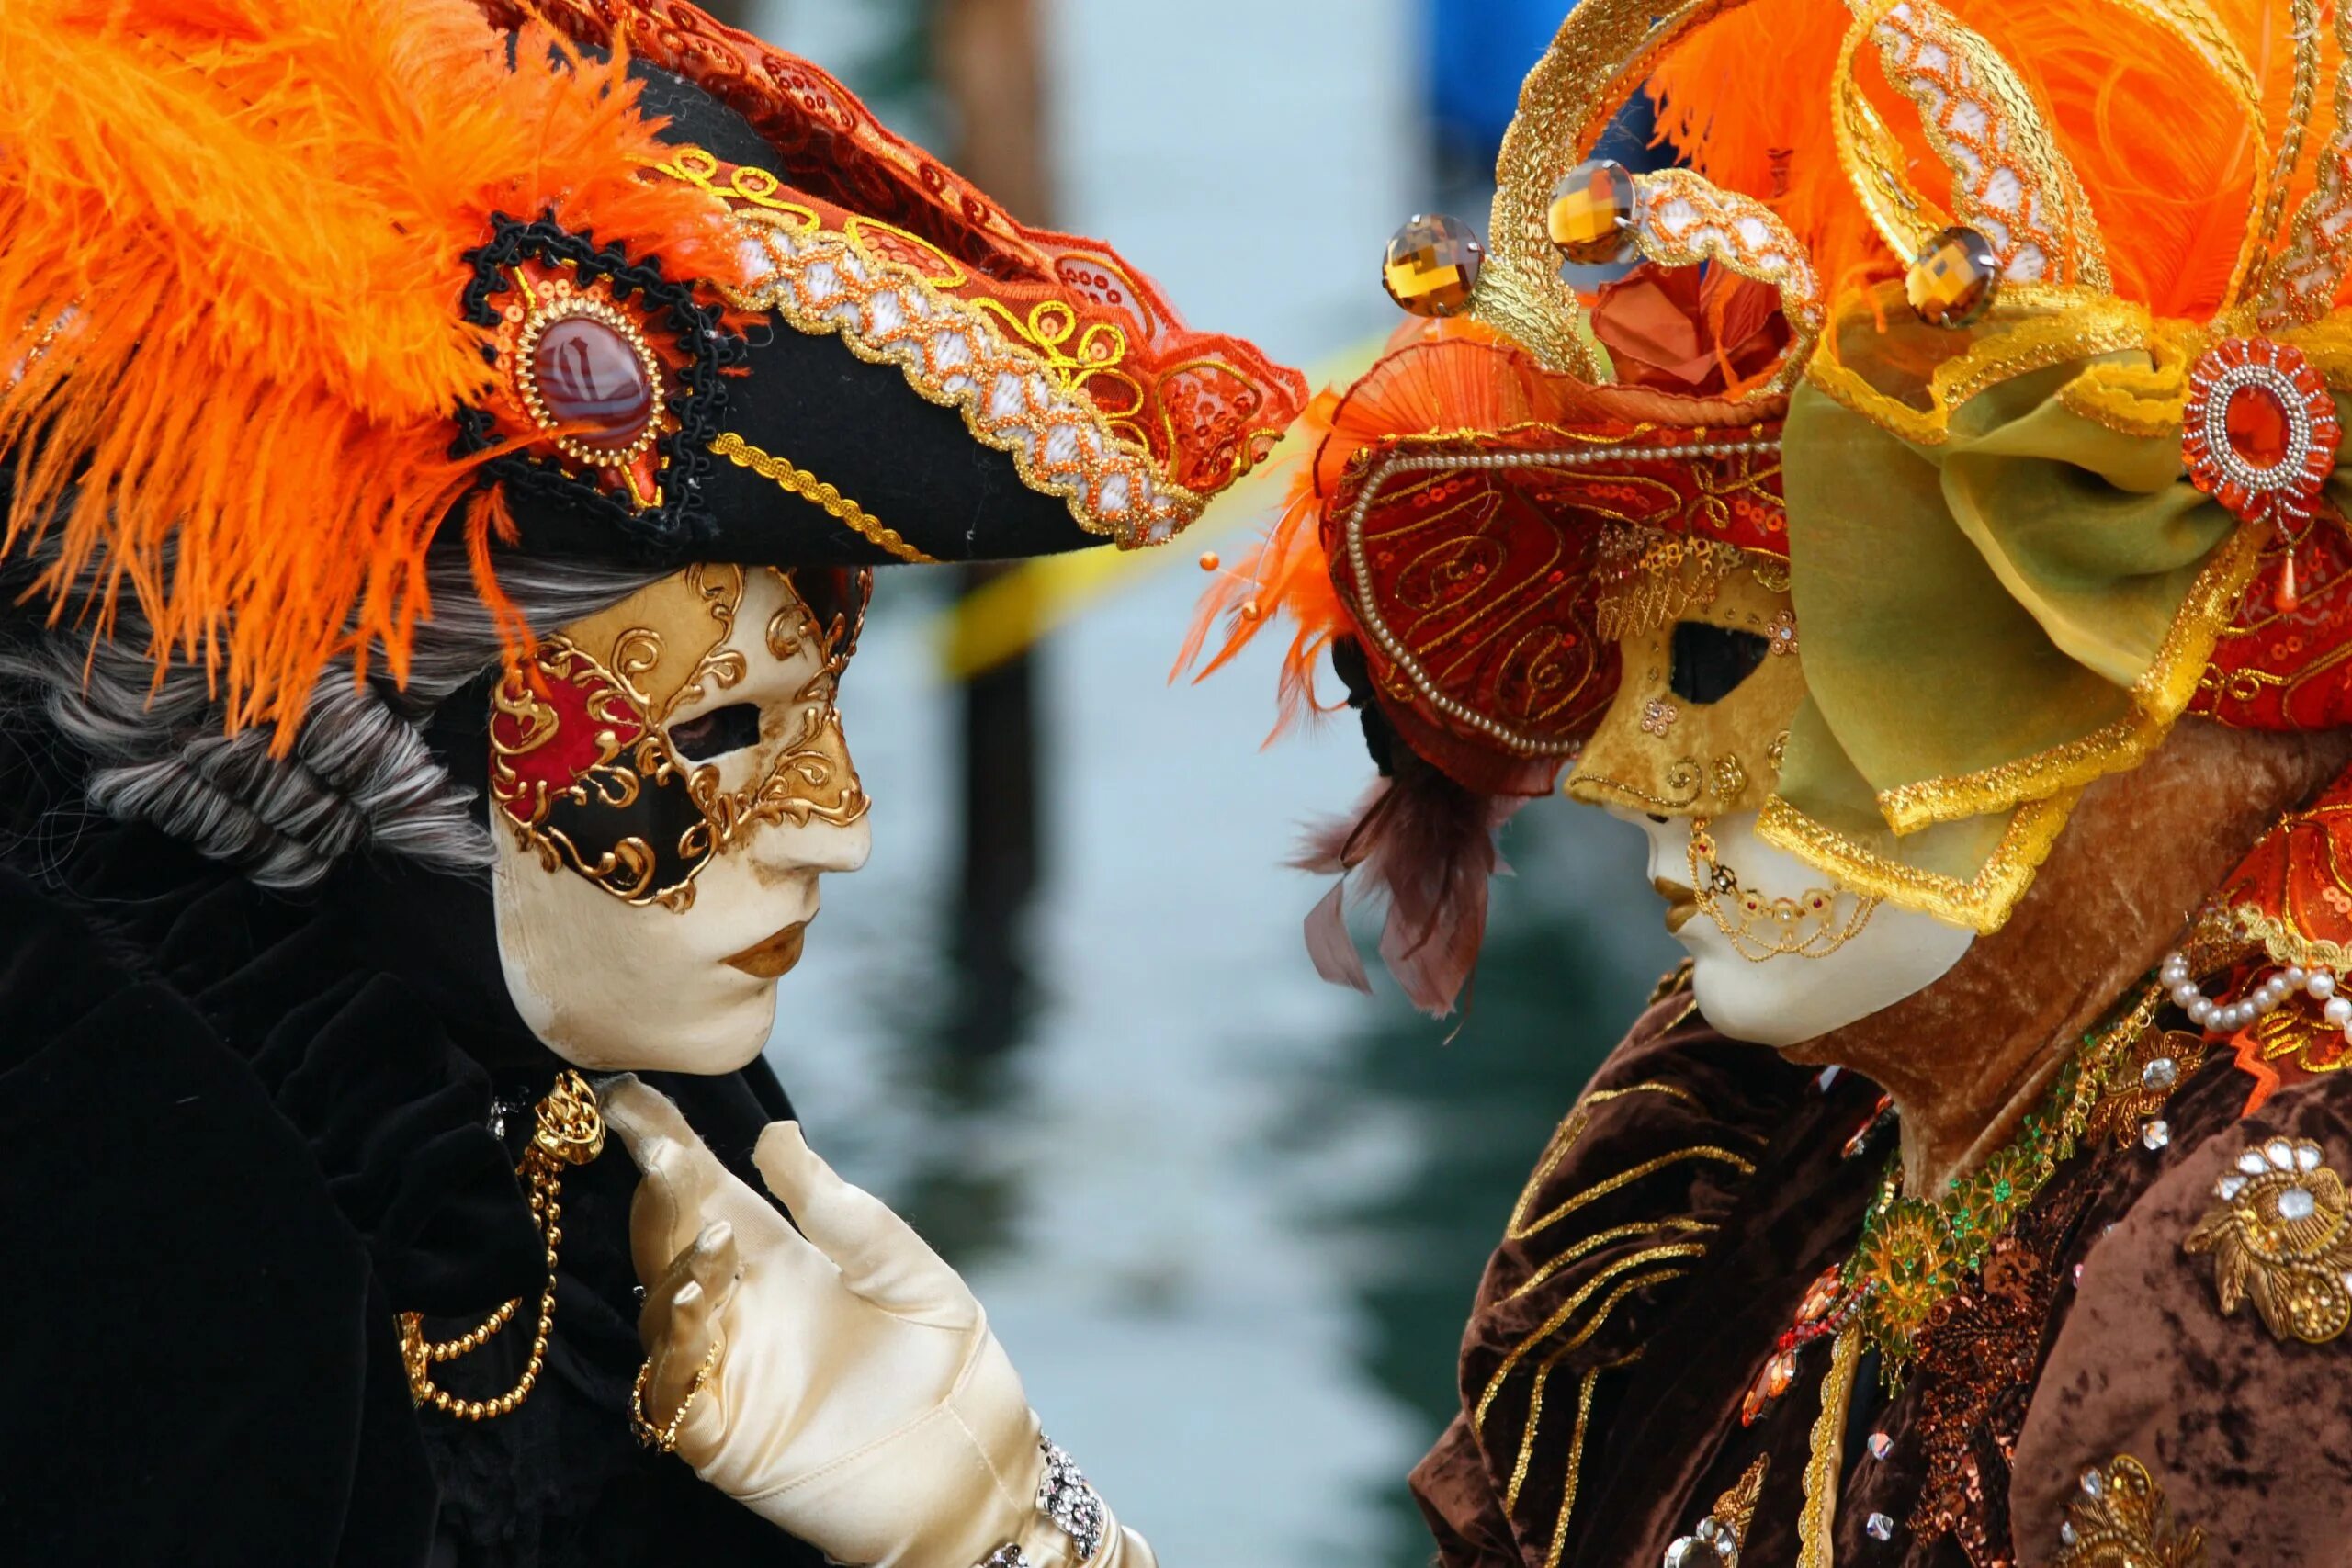 Италия Венеция карнавал. Венецкий карнавал в Италии. Венецианская маска Вольто. Венецианский карнавал Вольто. Карнавальные картинки